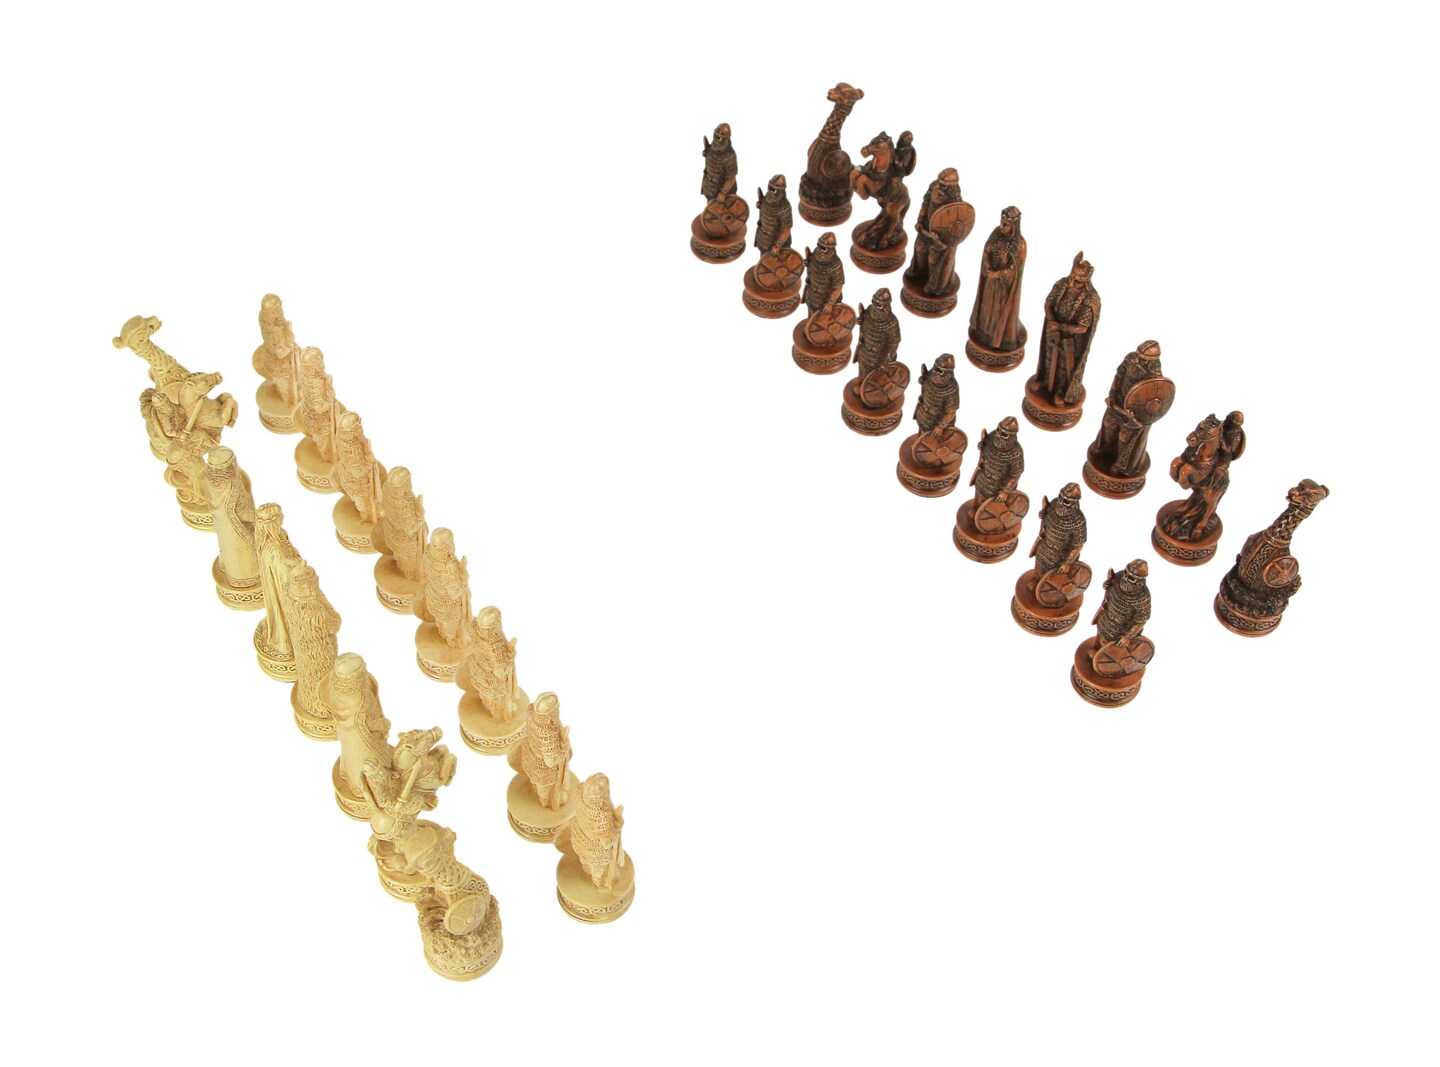 Intricately Detailed Viking Warriors Chessmen Set Chess Pieces